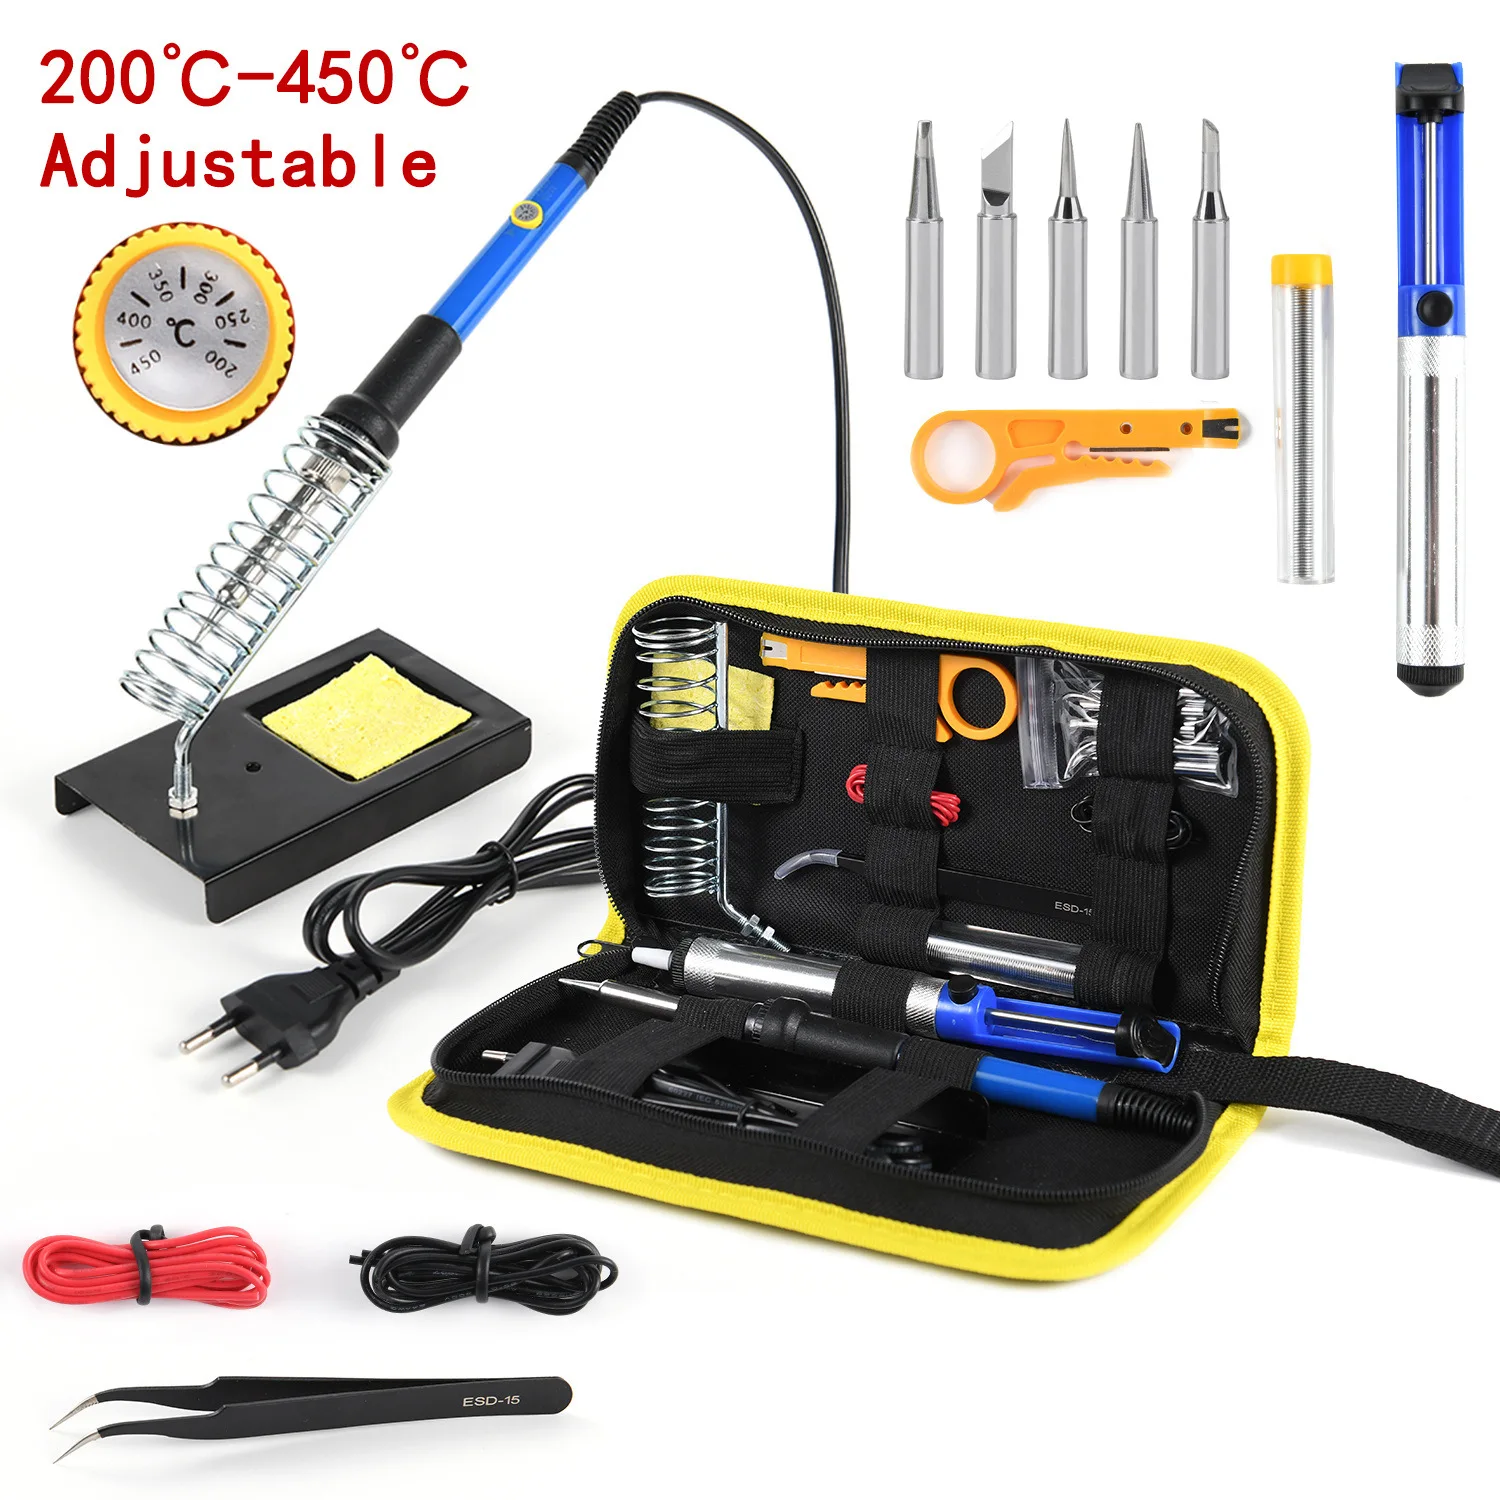 

15PCS 60W Electric Solder Iron Temperature Adjustable Soldering Iron Rework Station Kit Handle Heat Pencil Welding Repair Tools